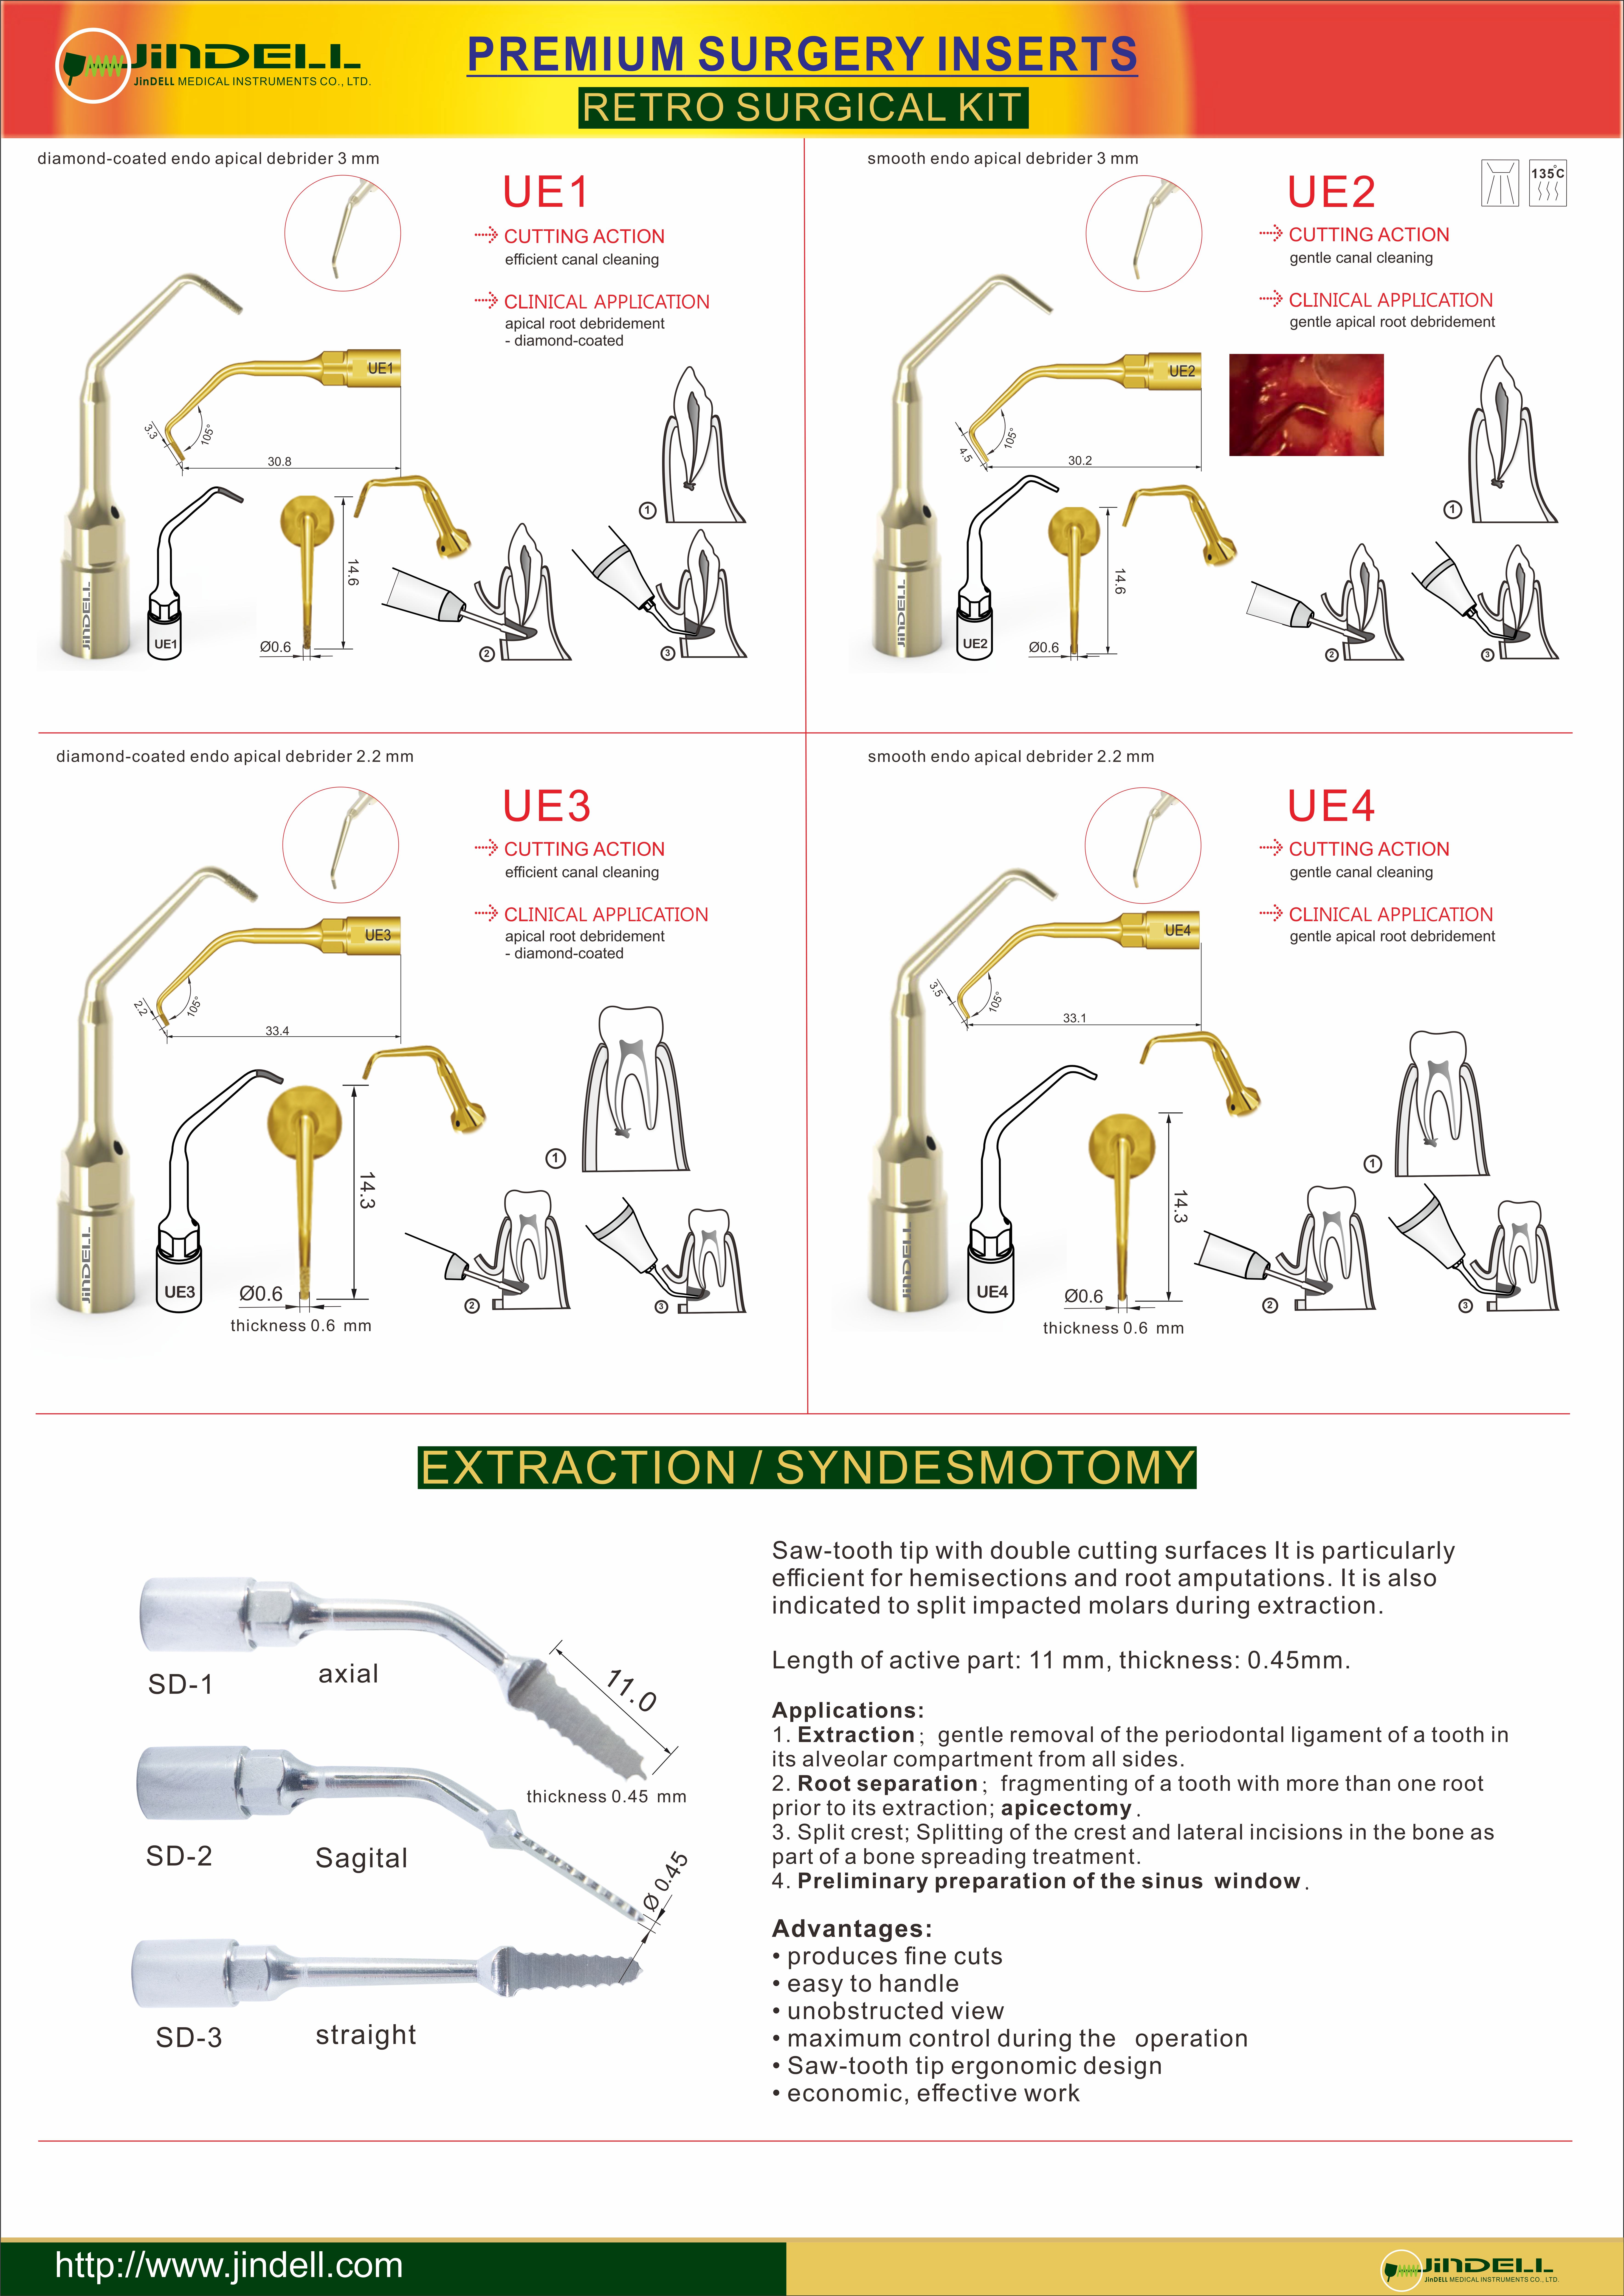 Premium Surgical Inserts- Endodontics & Syndesmotomy Inserts